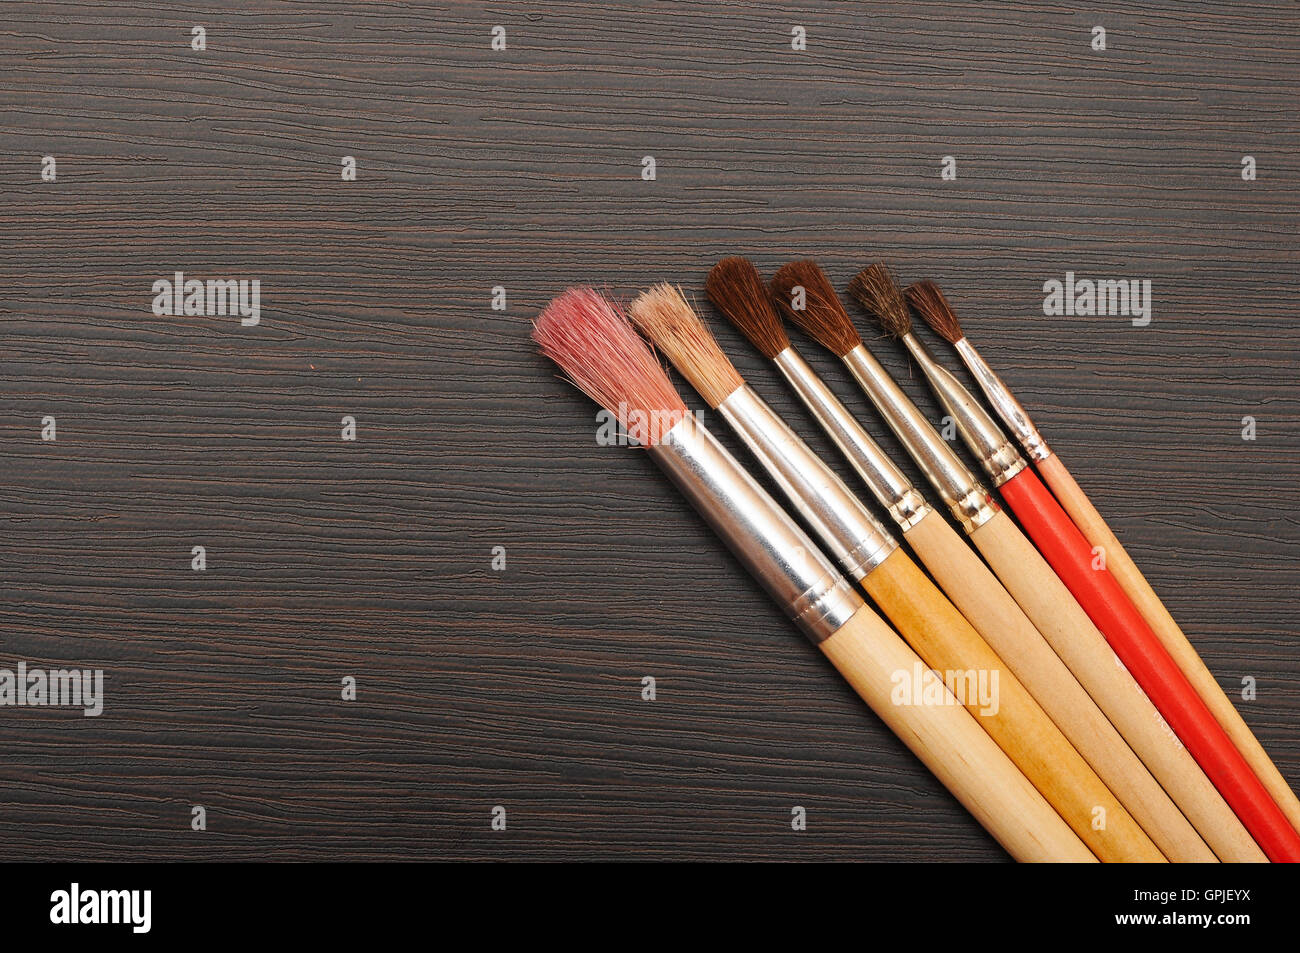 Paint brushes on dark wooden background Stock Photo